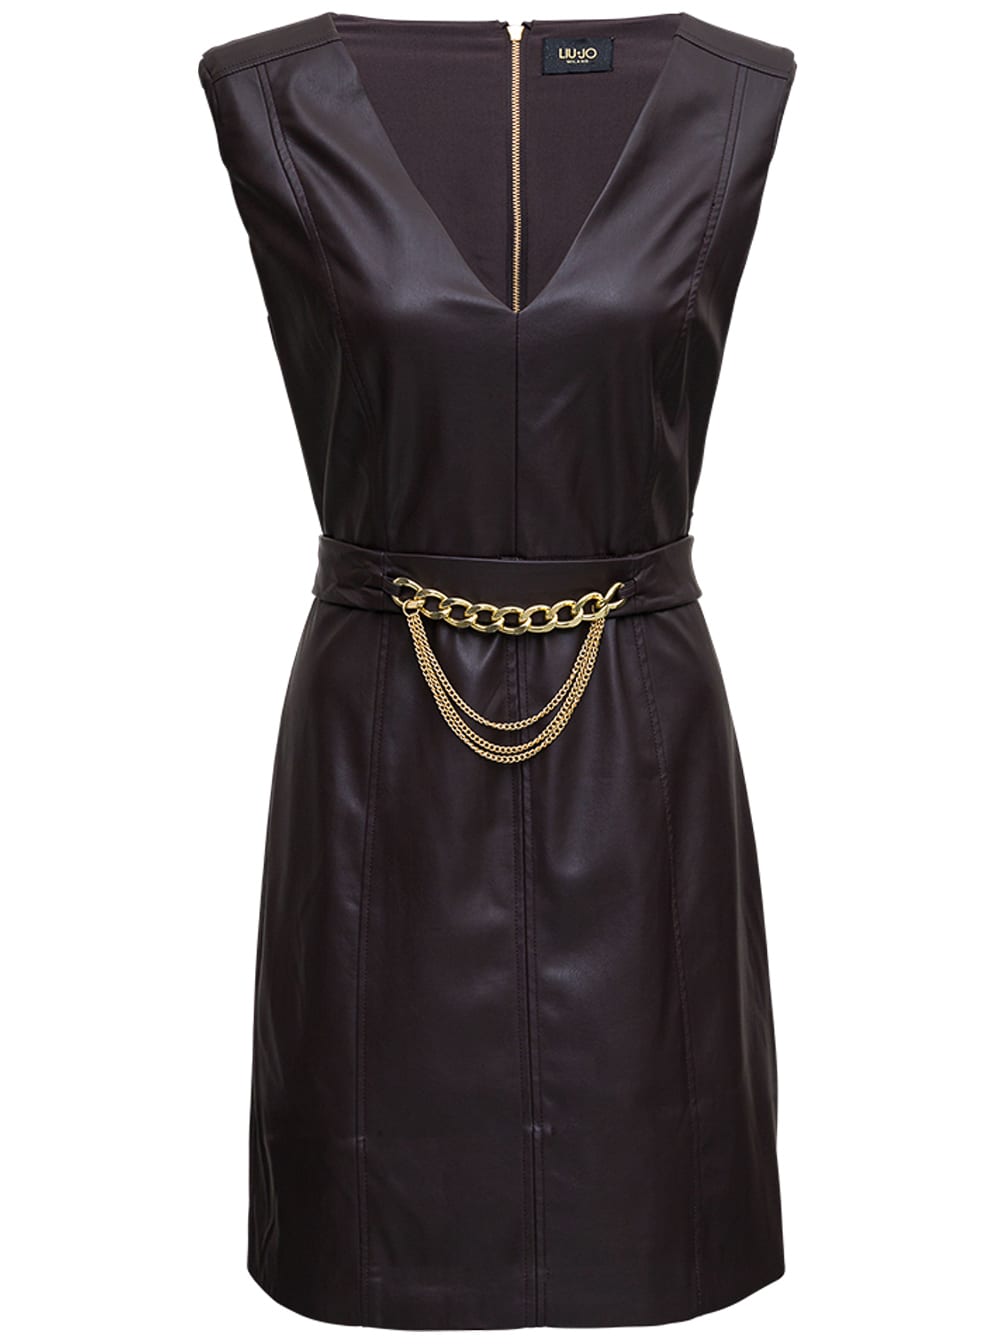 Liu-Jo Brown Leatheret Dress With Chain Belt